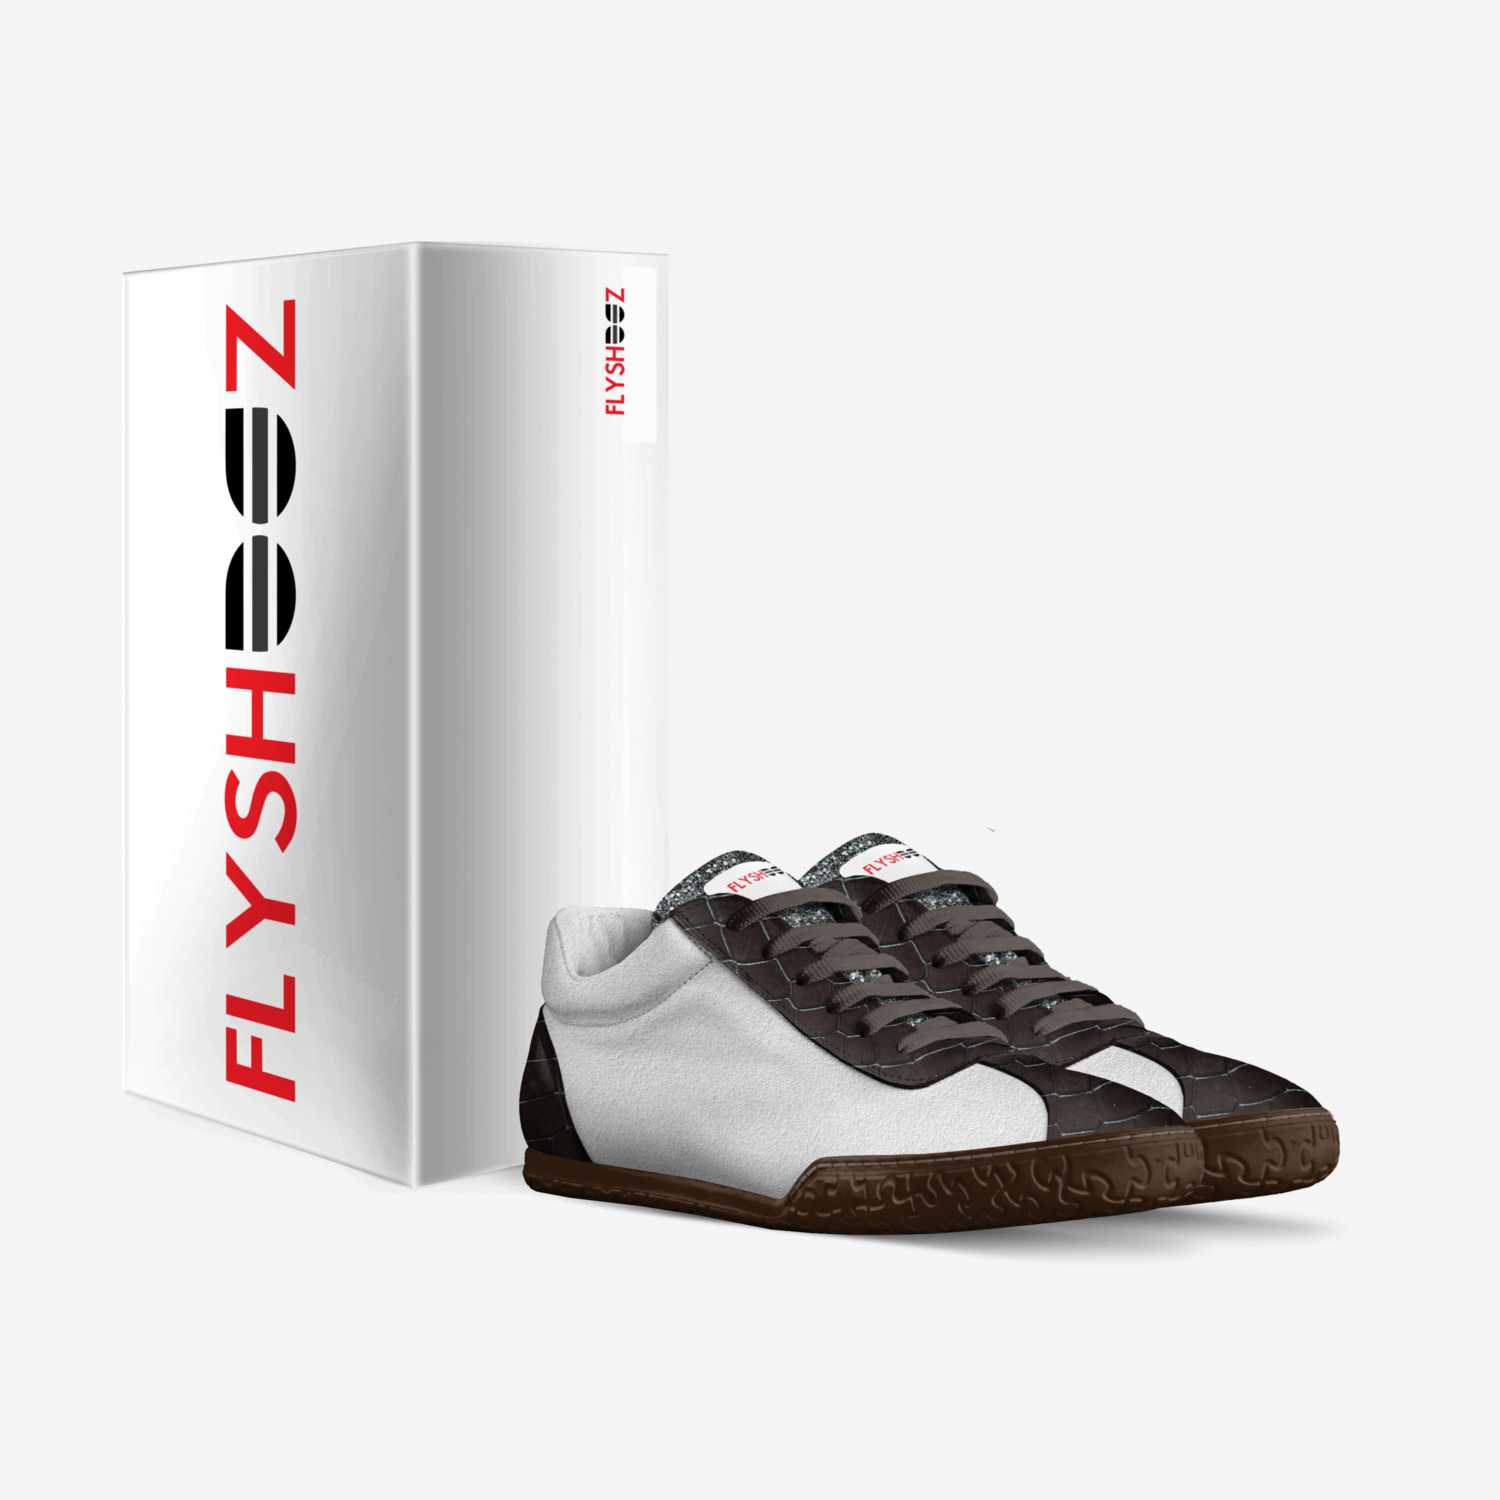 FLY SHOOZ custom made in Italy shoes by Moffatt Gordon | Box view